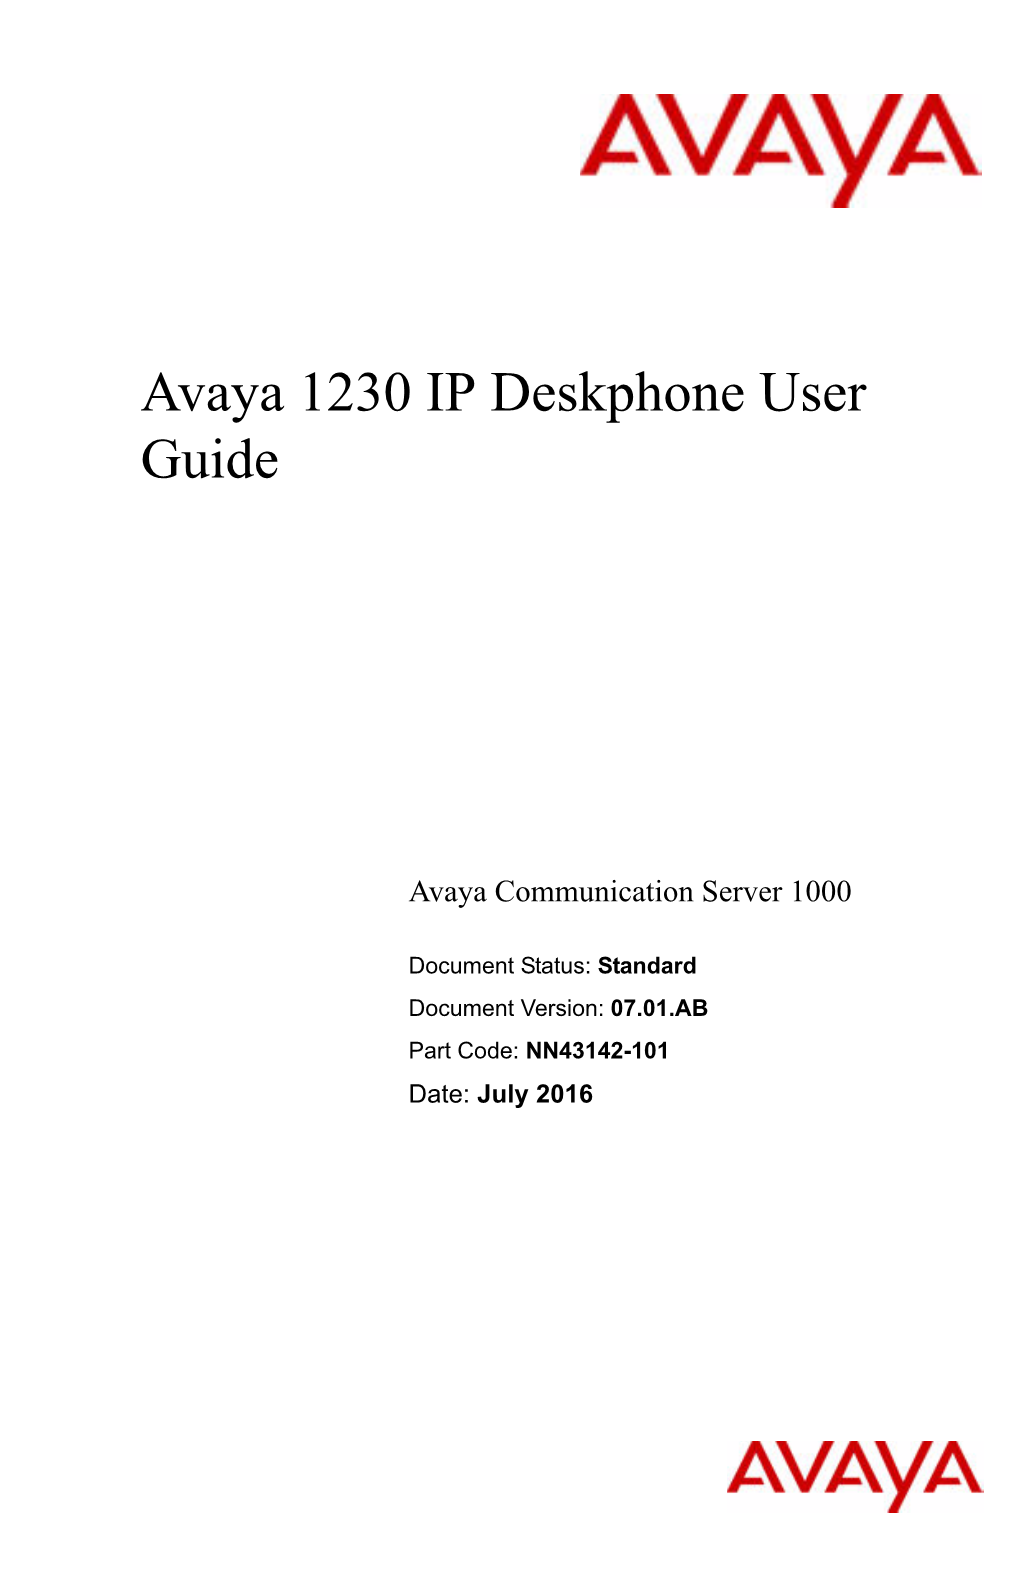 Nortel IP Phone 1230 User Guide